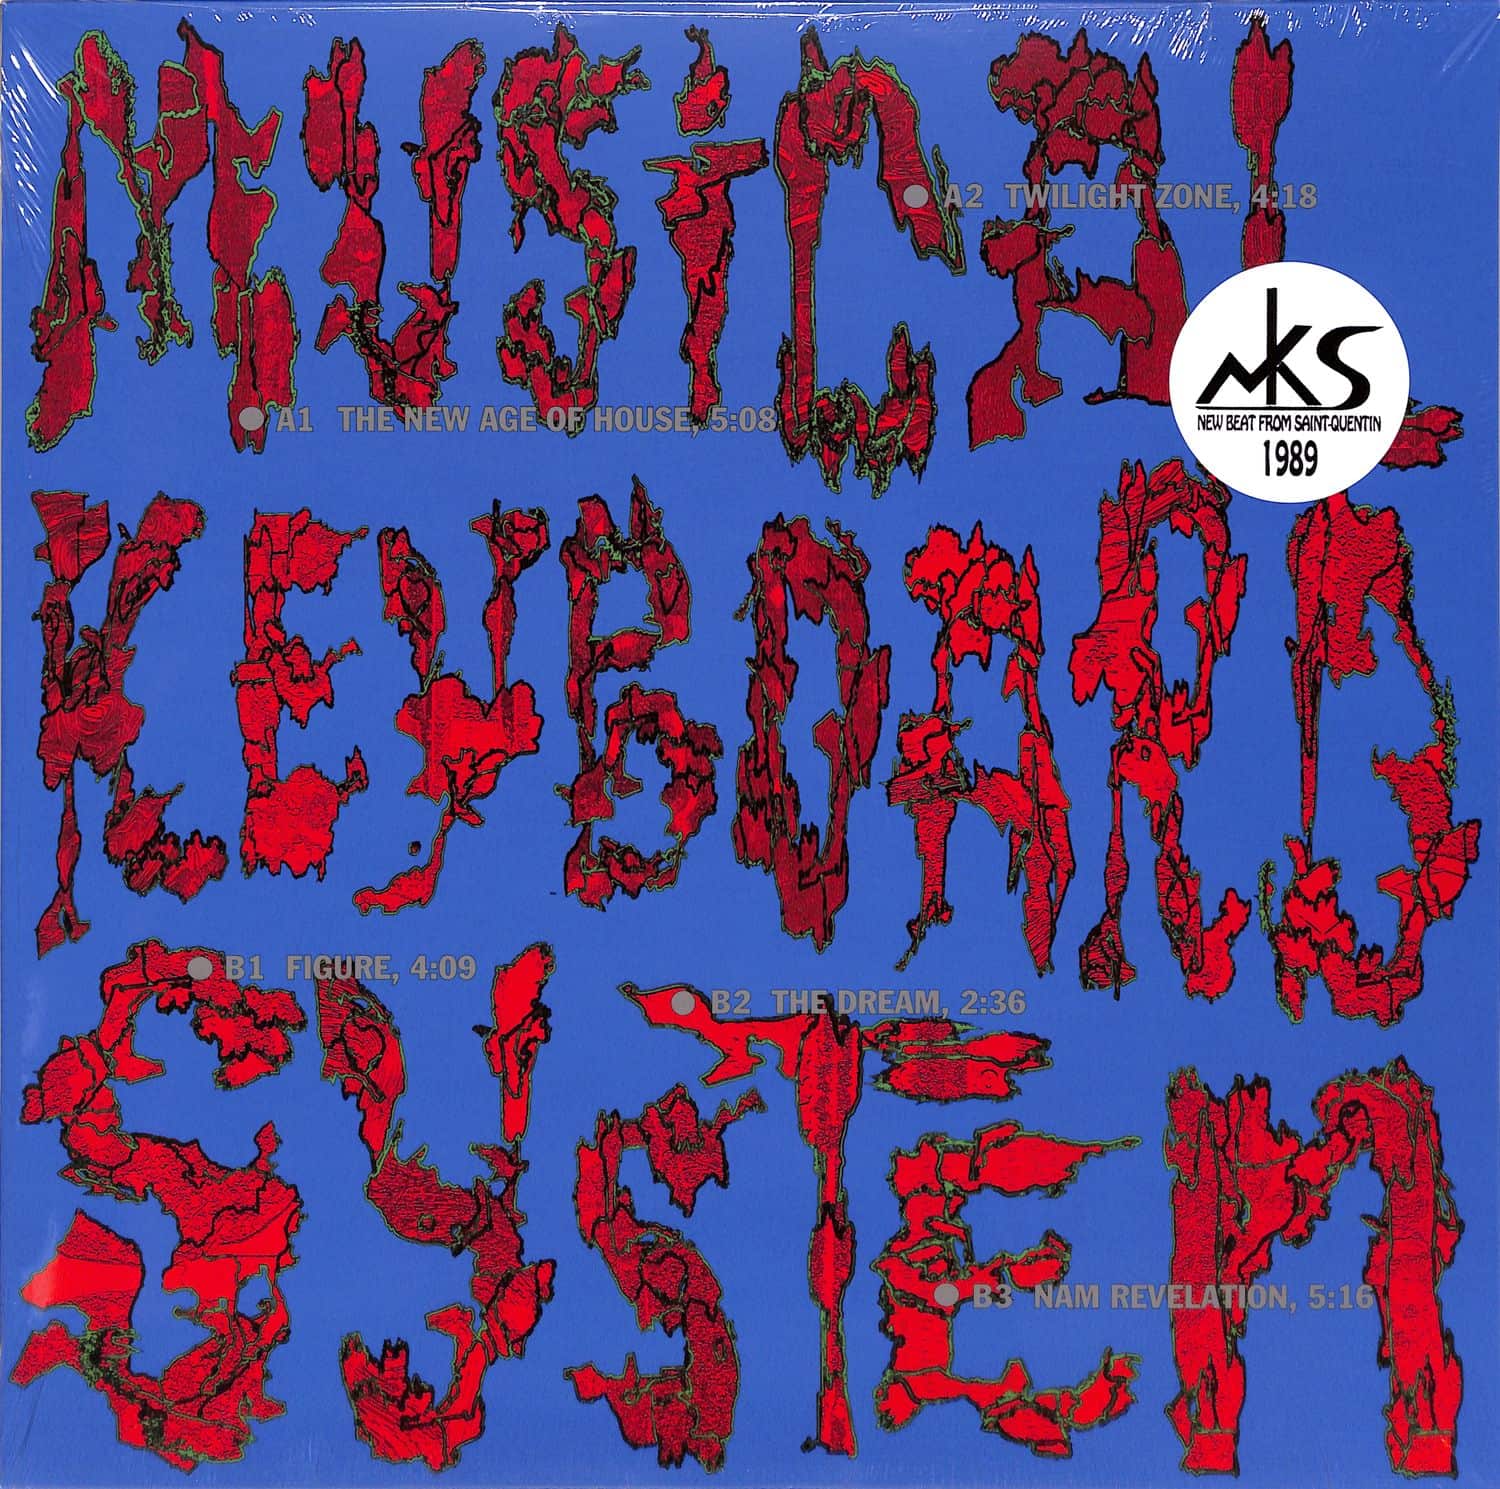 MKS - MUSICAL KEYBARD SYSTEM